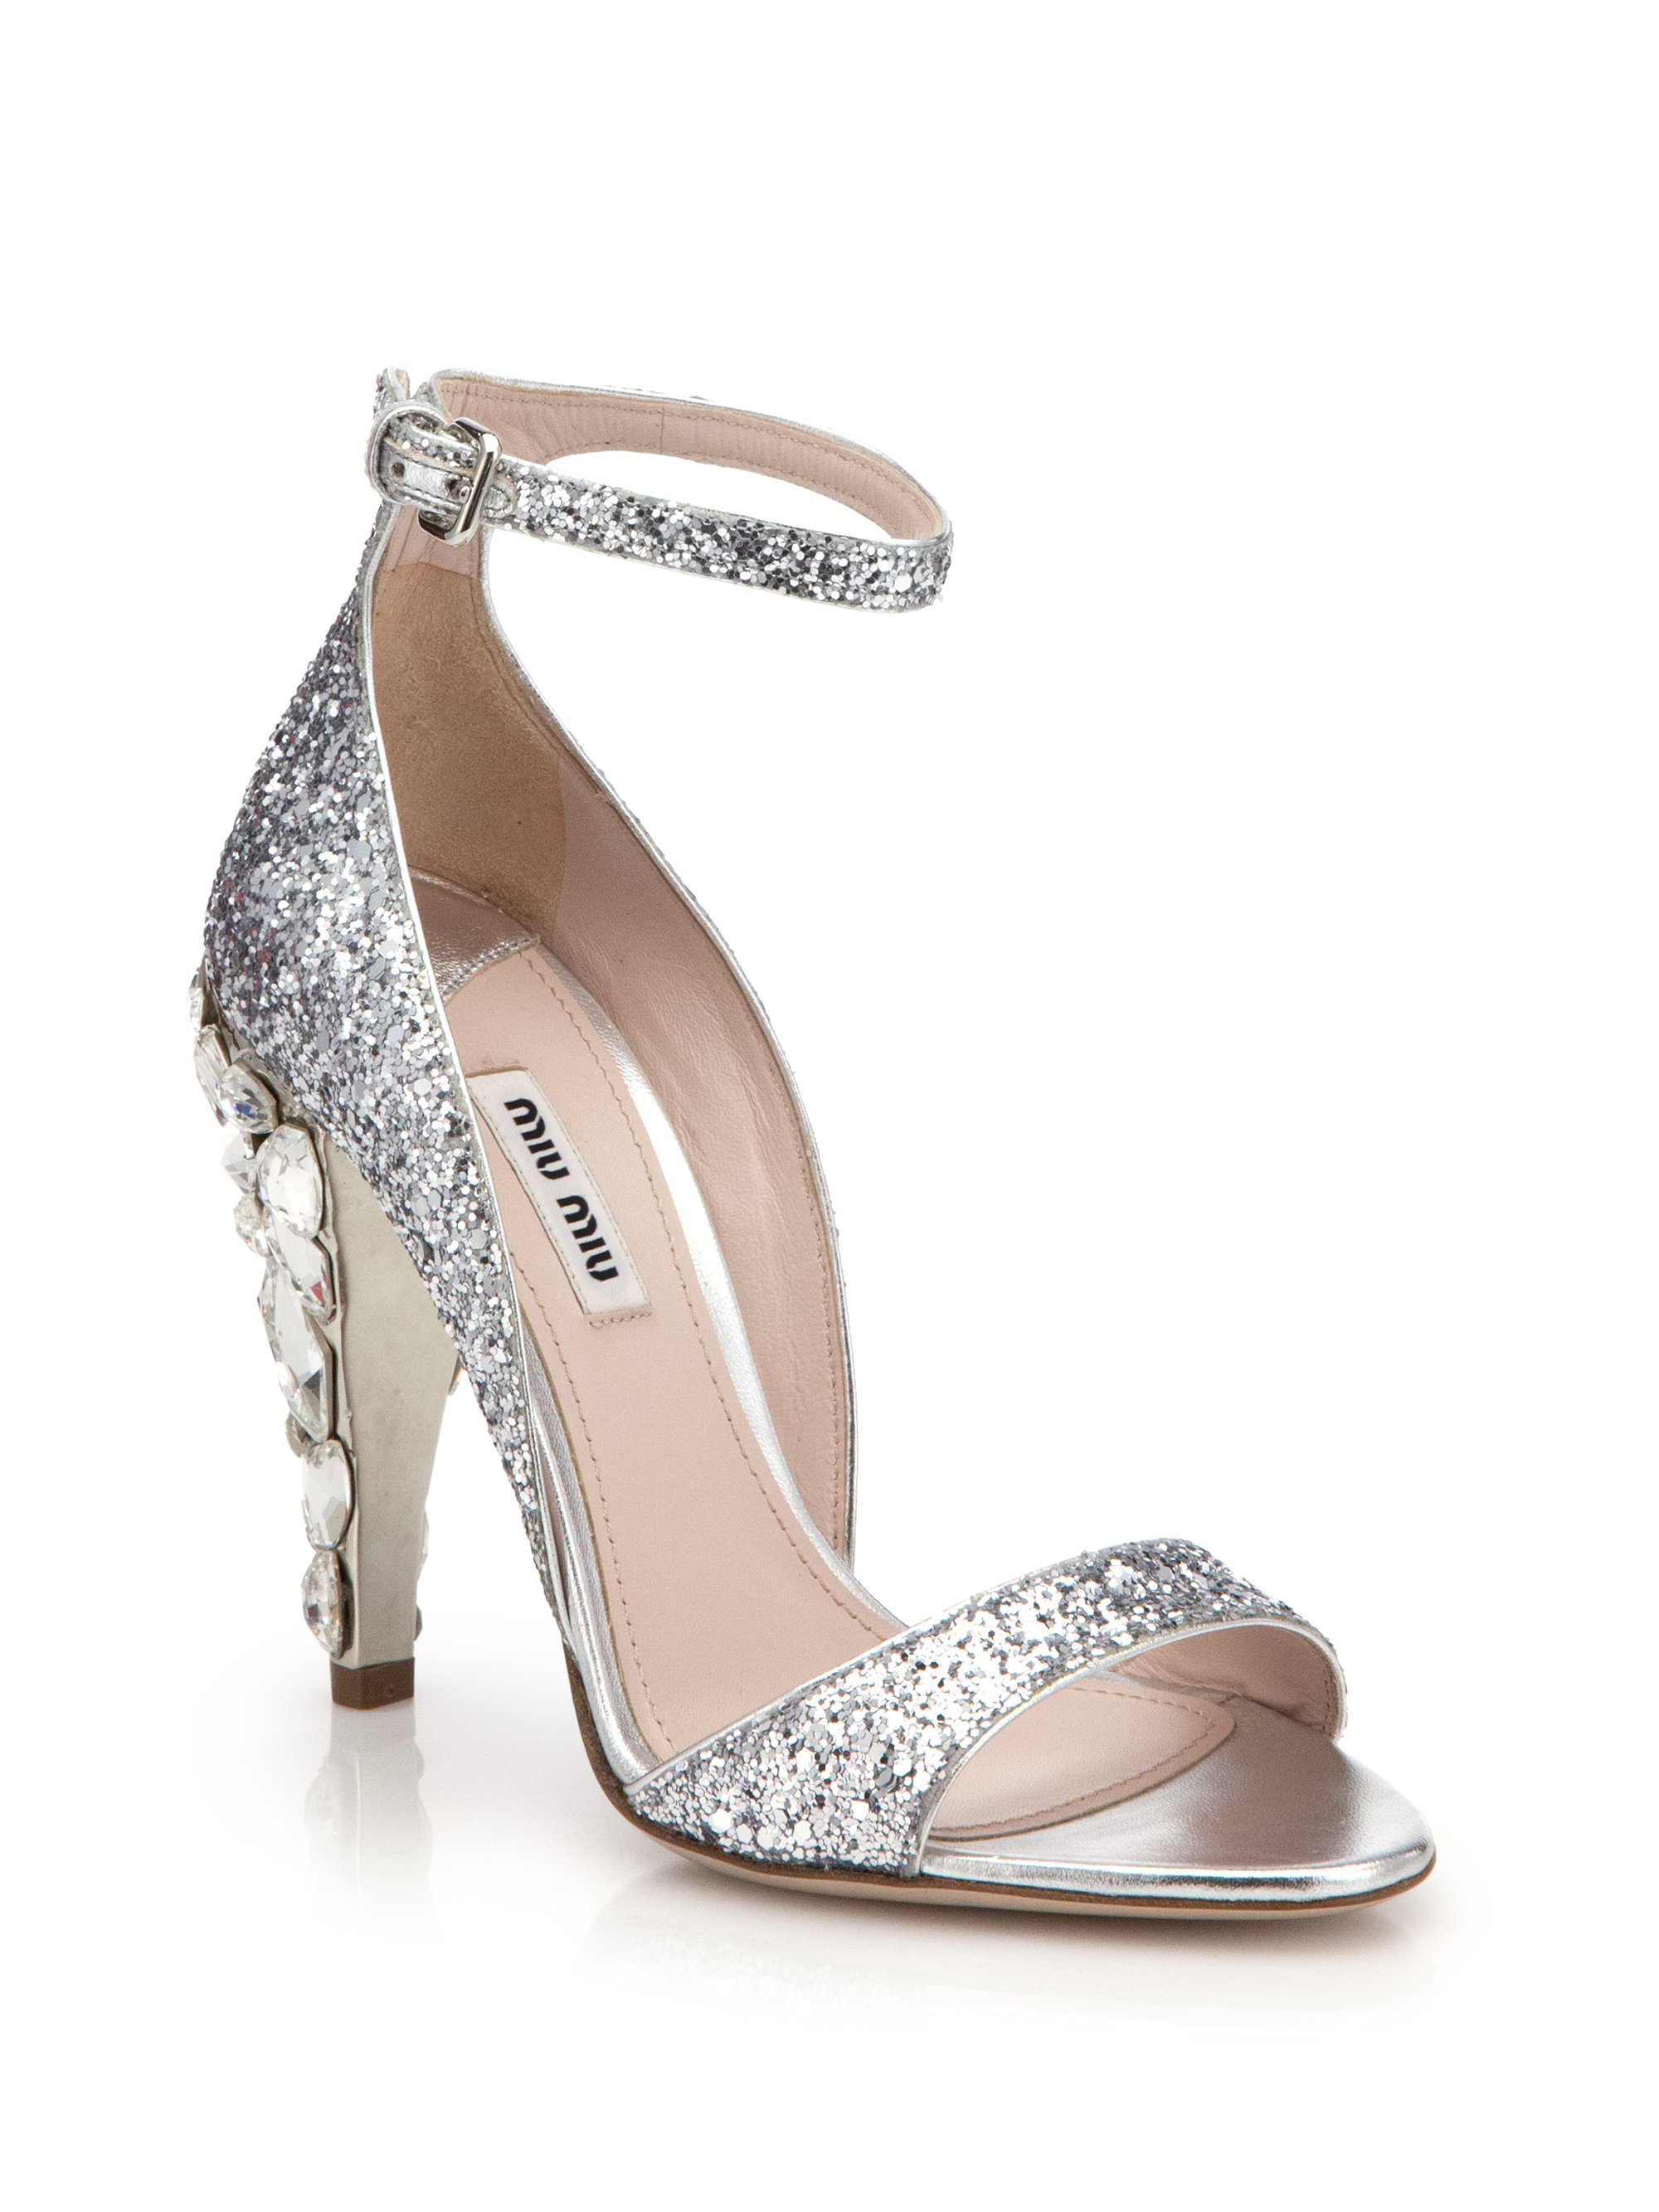 Lyst - Miu Miu Crystal-heel Glittered Leather Sandals in Metallic